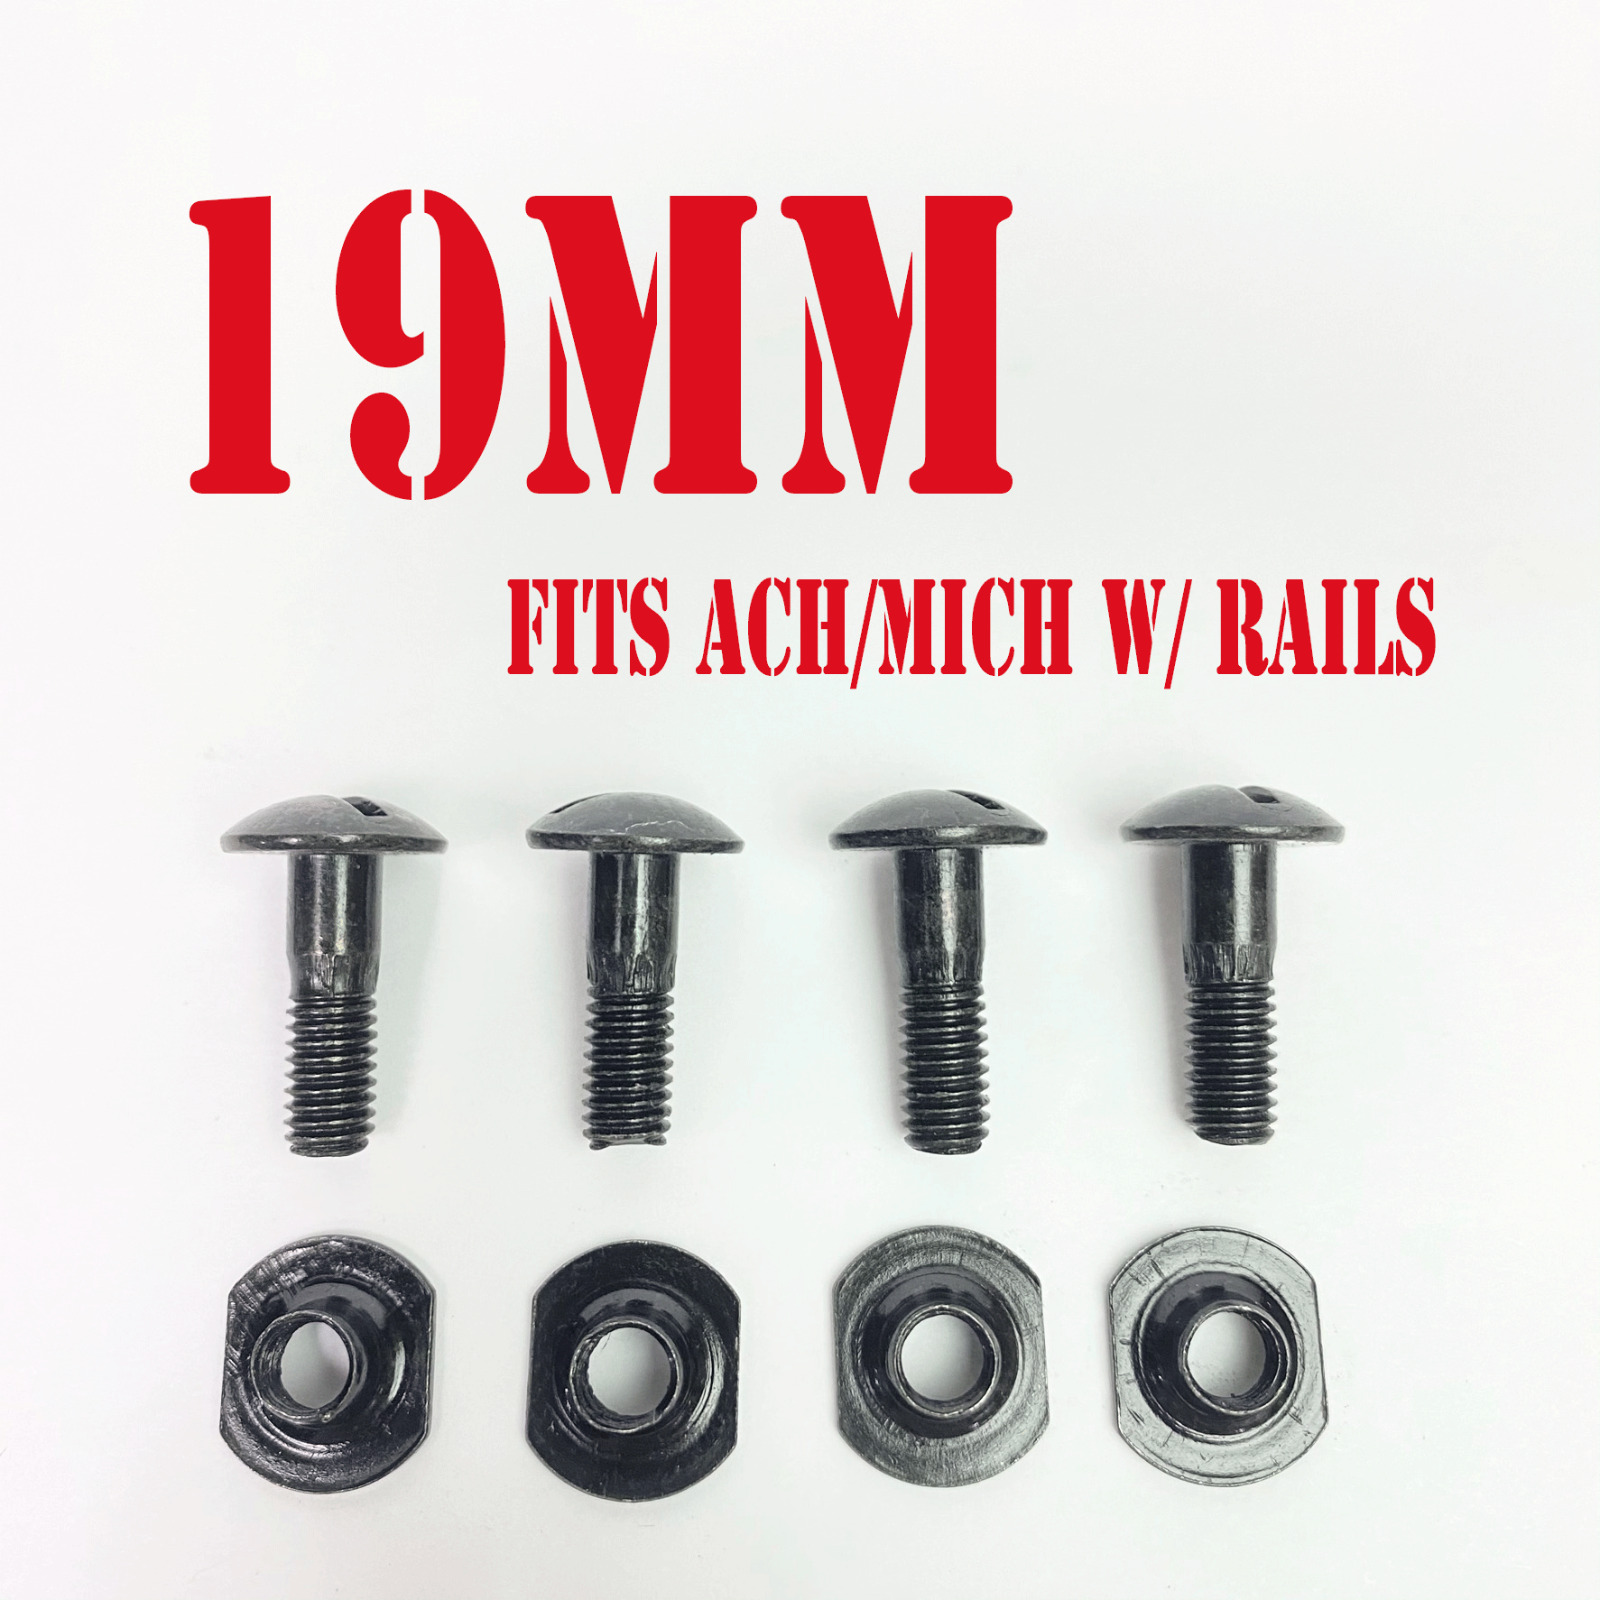 19mm ACH w/ RAILS HELMET HARDWARE SET 4-POINT CHINSTRAP SCREW BOLT & NUT 4pk New